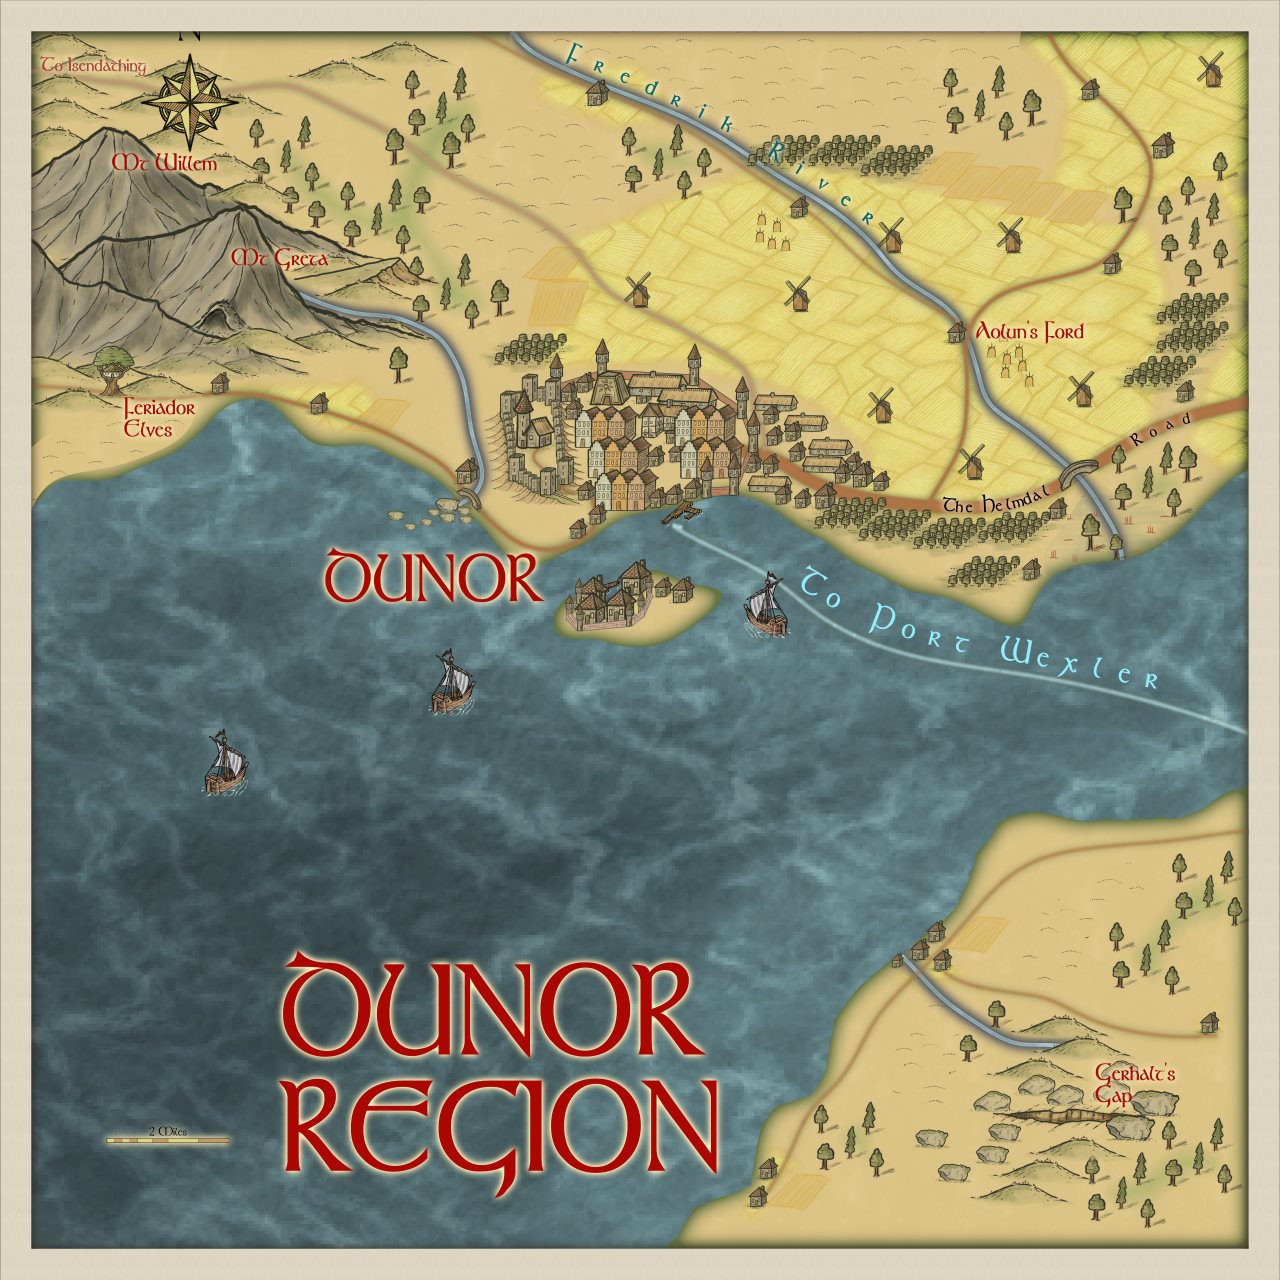 Nibirum Map: dunor region by Quenten Walker